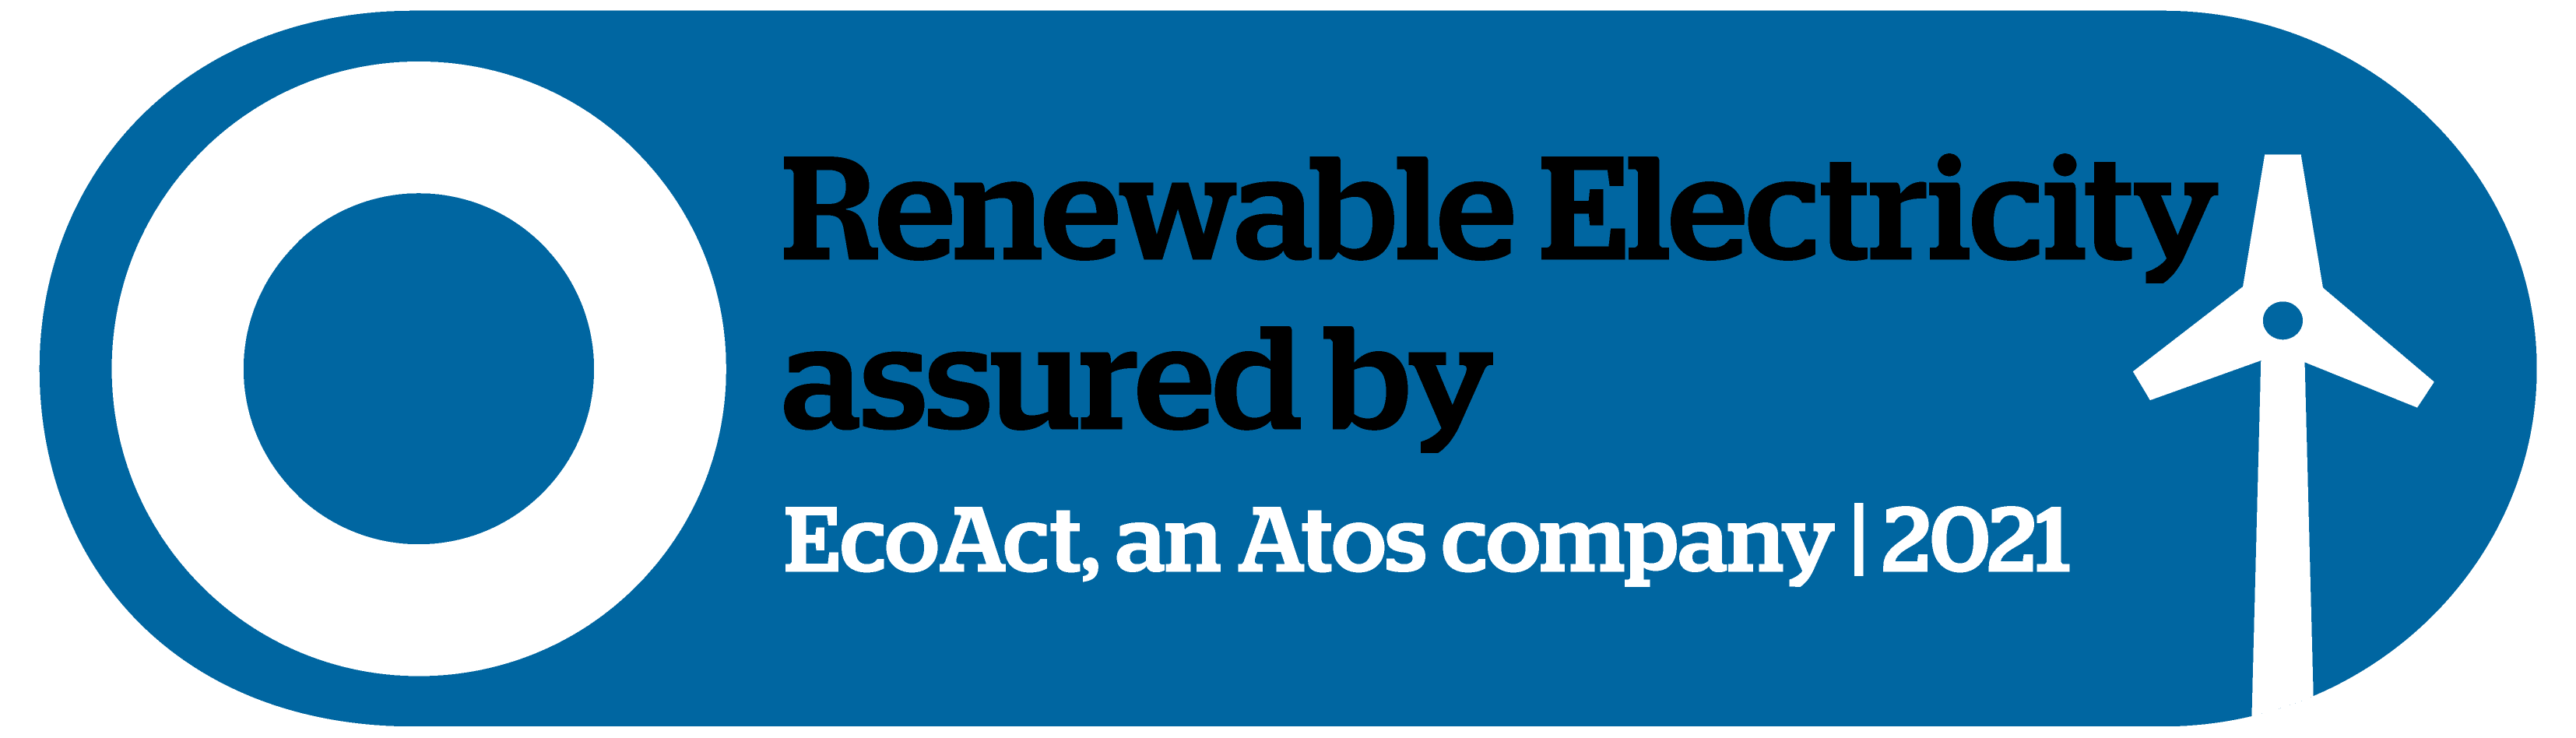 Renewable Electricity Verification EcoAct 2021 stamp